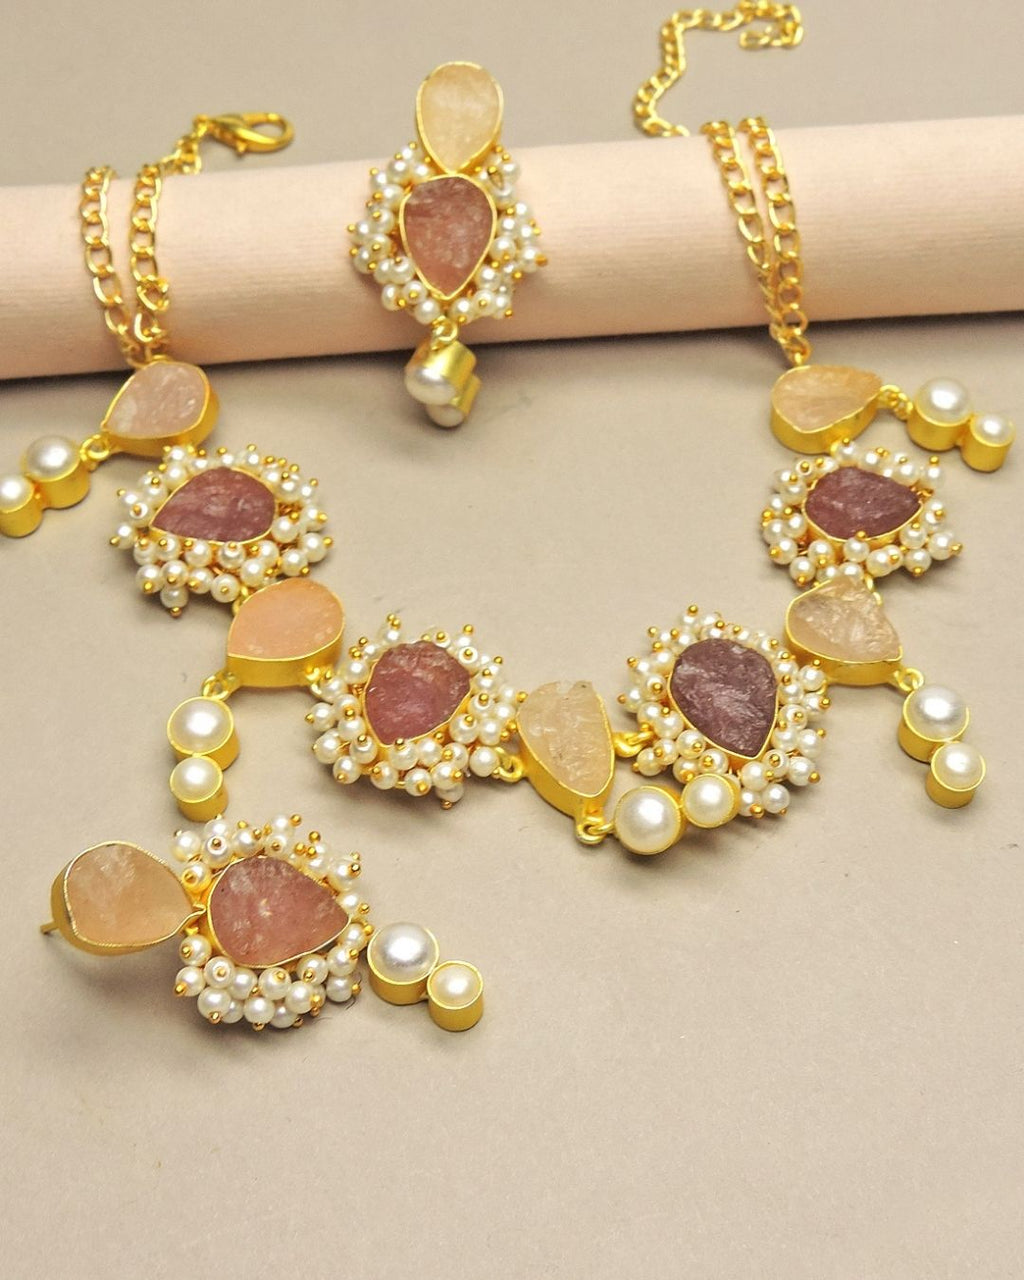 Citrine & Jasper Bloom Necklace / Set - Necklaces - Handcrafted Jewellery - Made in India - Dubai Jewellery, Fashion & Lifestyle - Dori